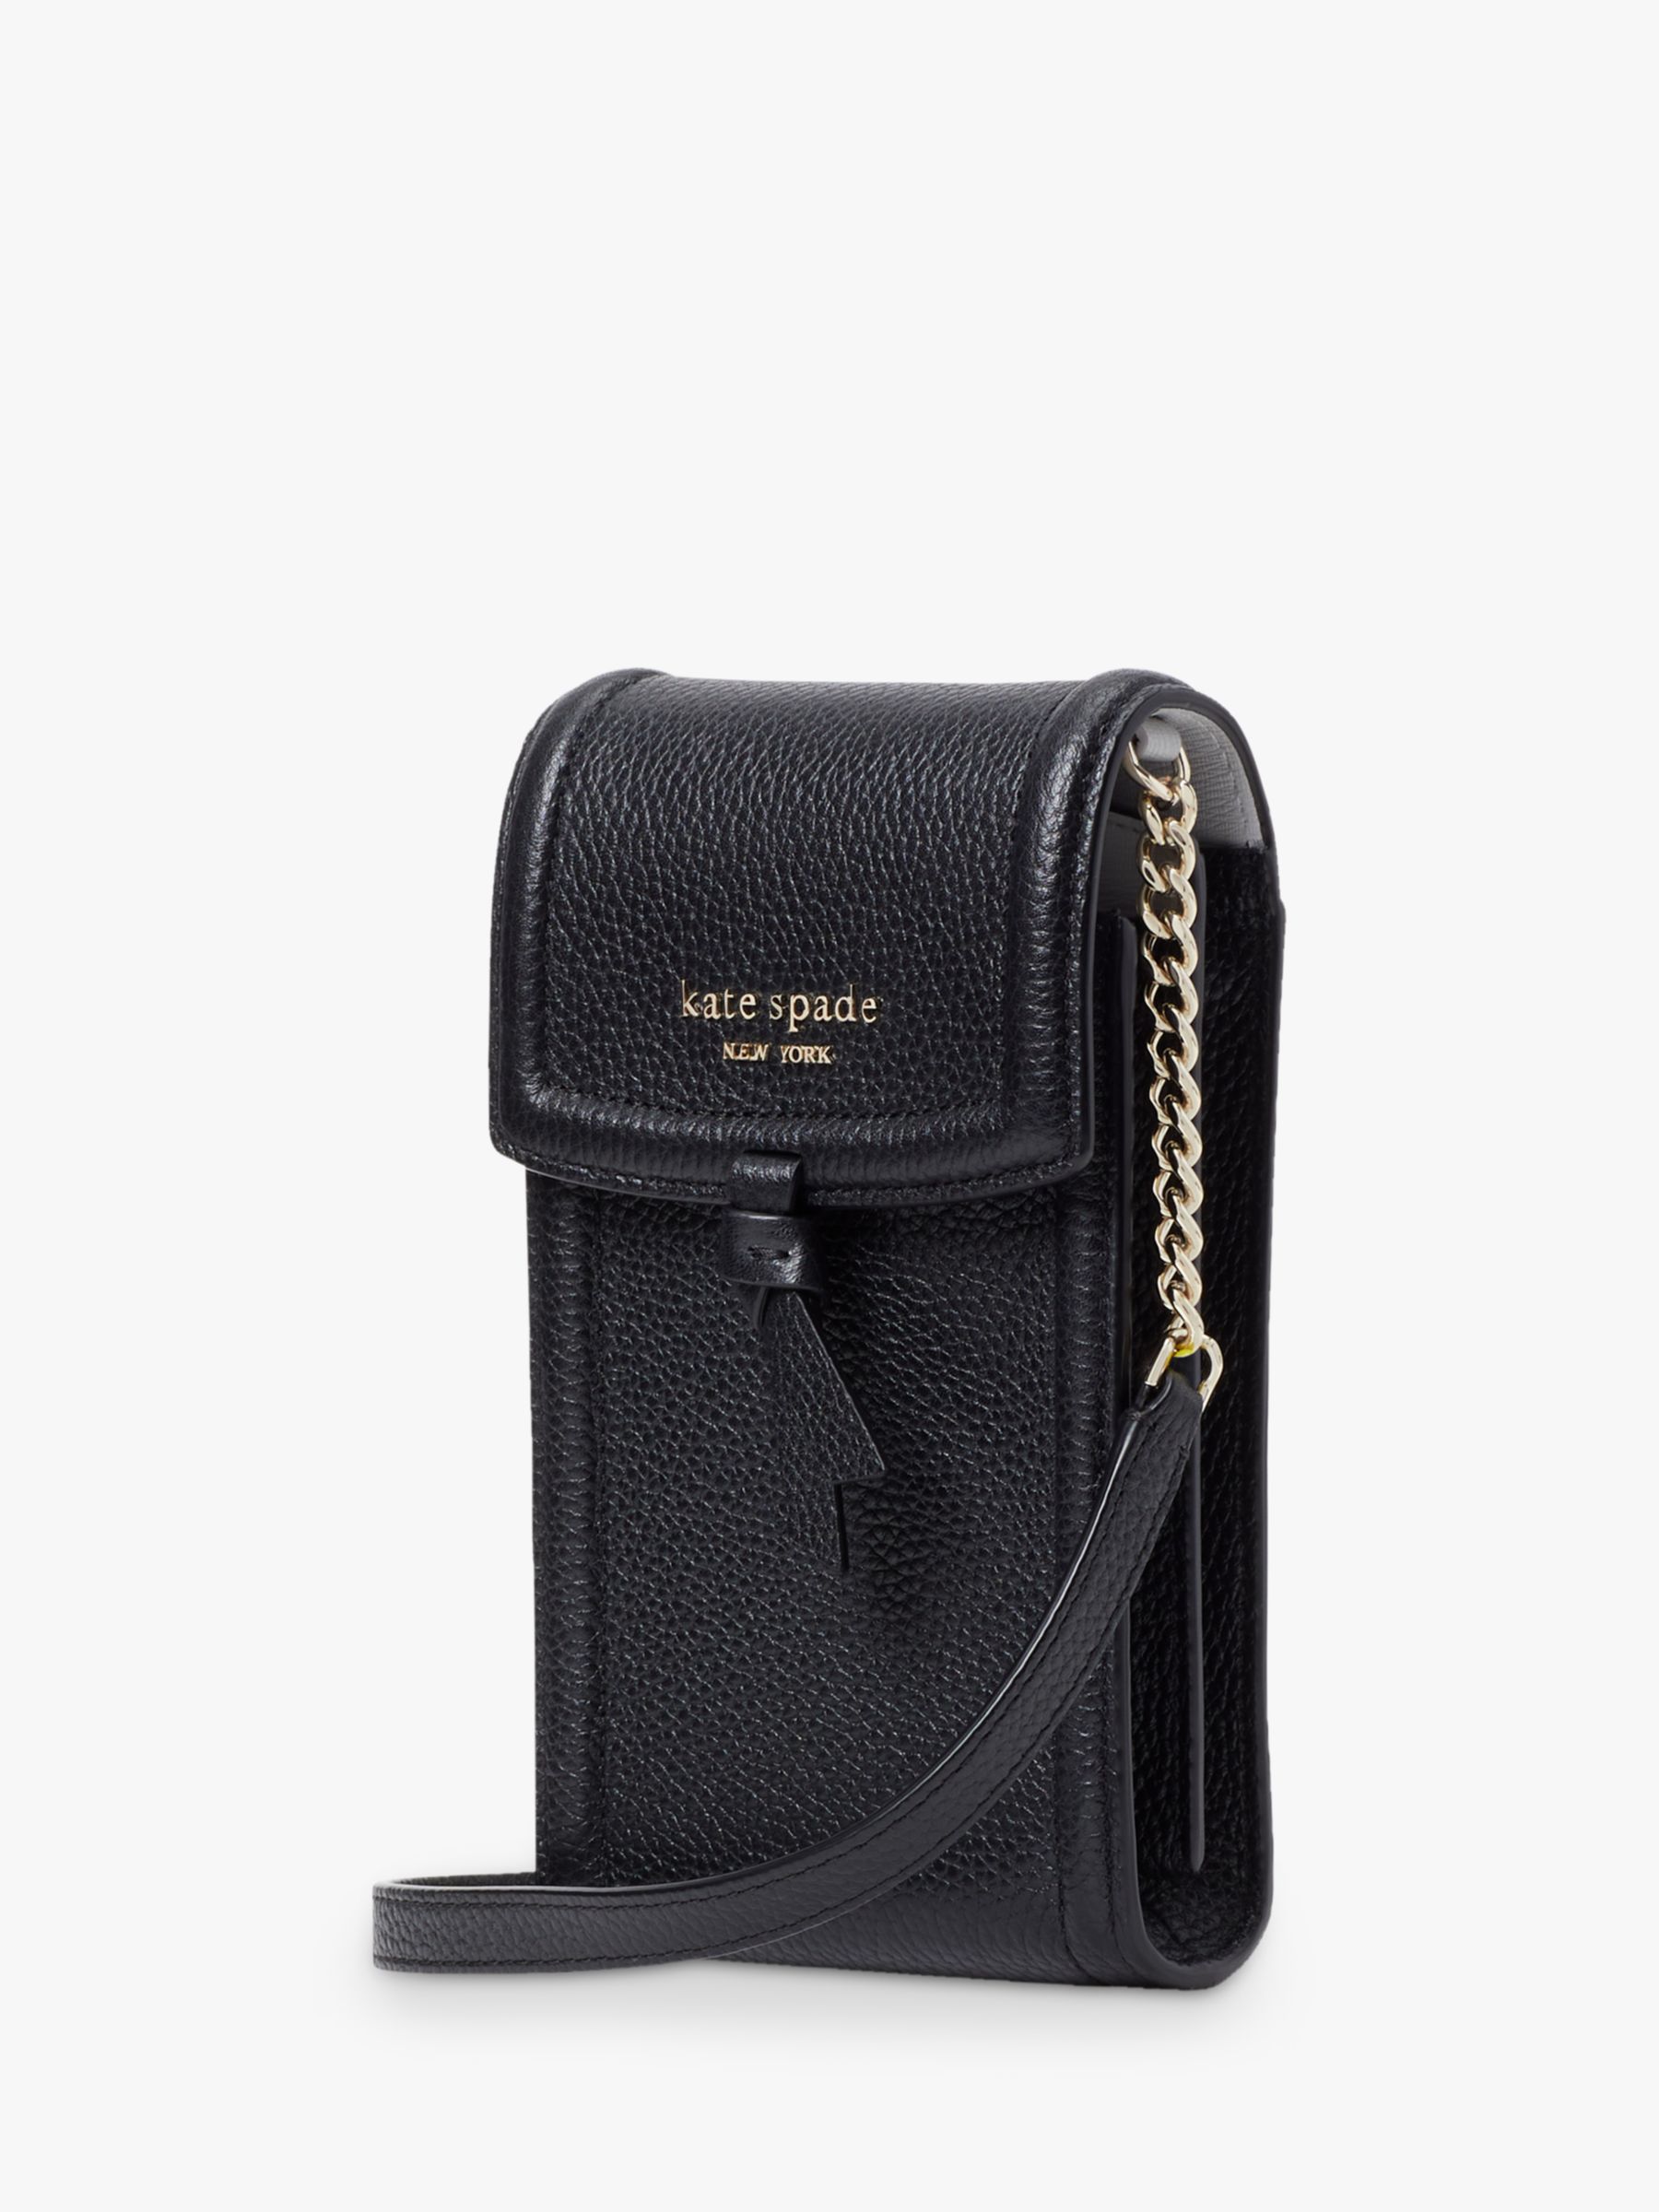 kate spade new york Knott Leather Phone Cross Body Bag, Black at John Lewis  & Partners